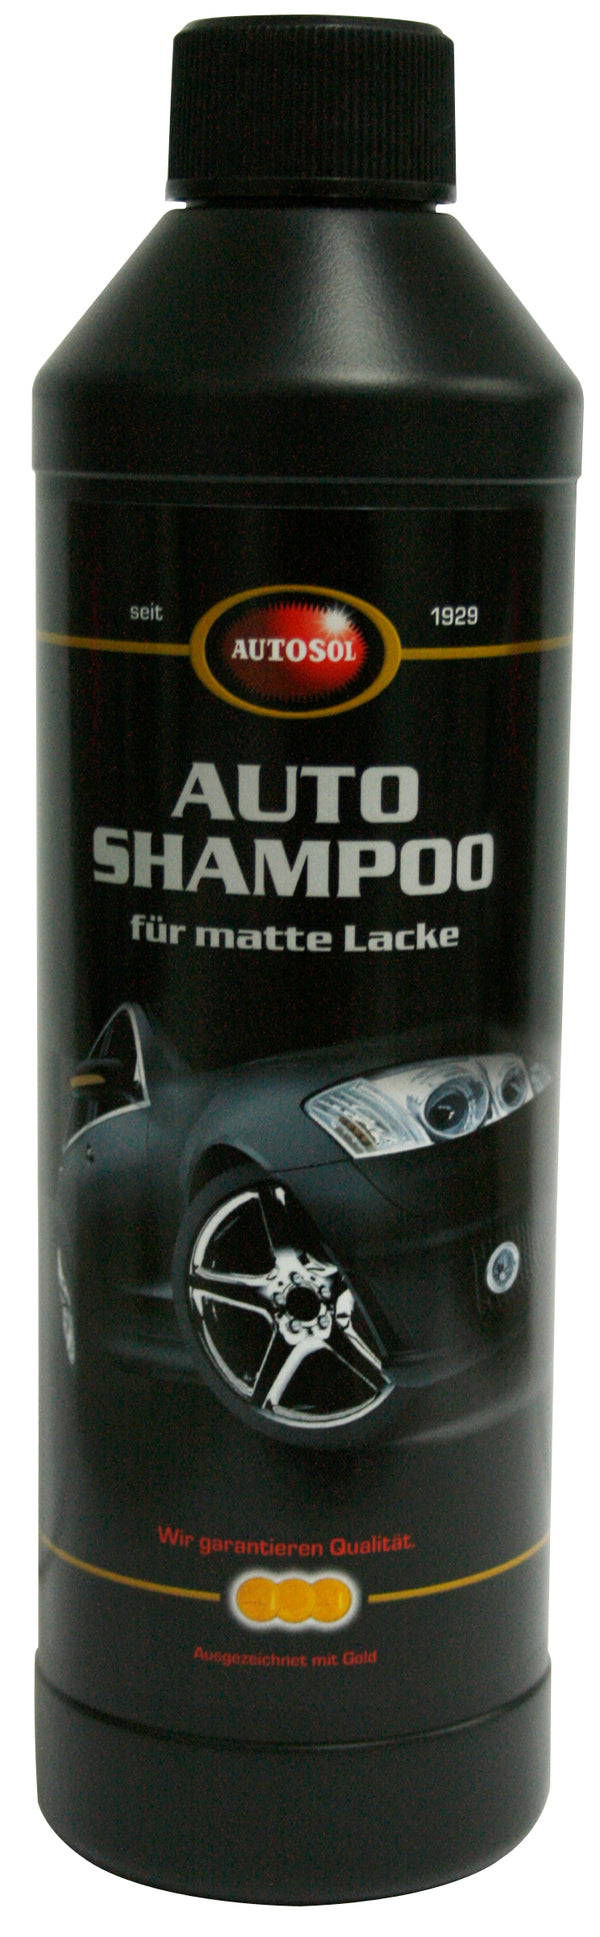 000800 Autosol Matt Paintwork Special Shampoo (500mls)